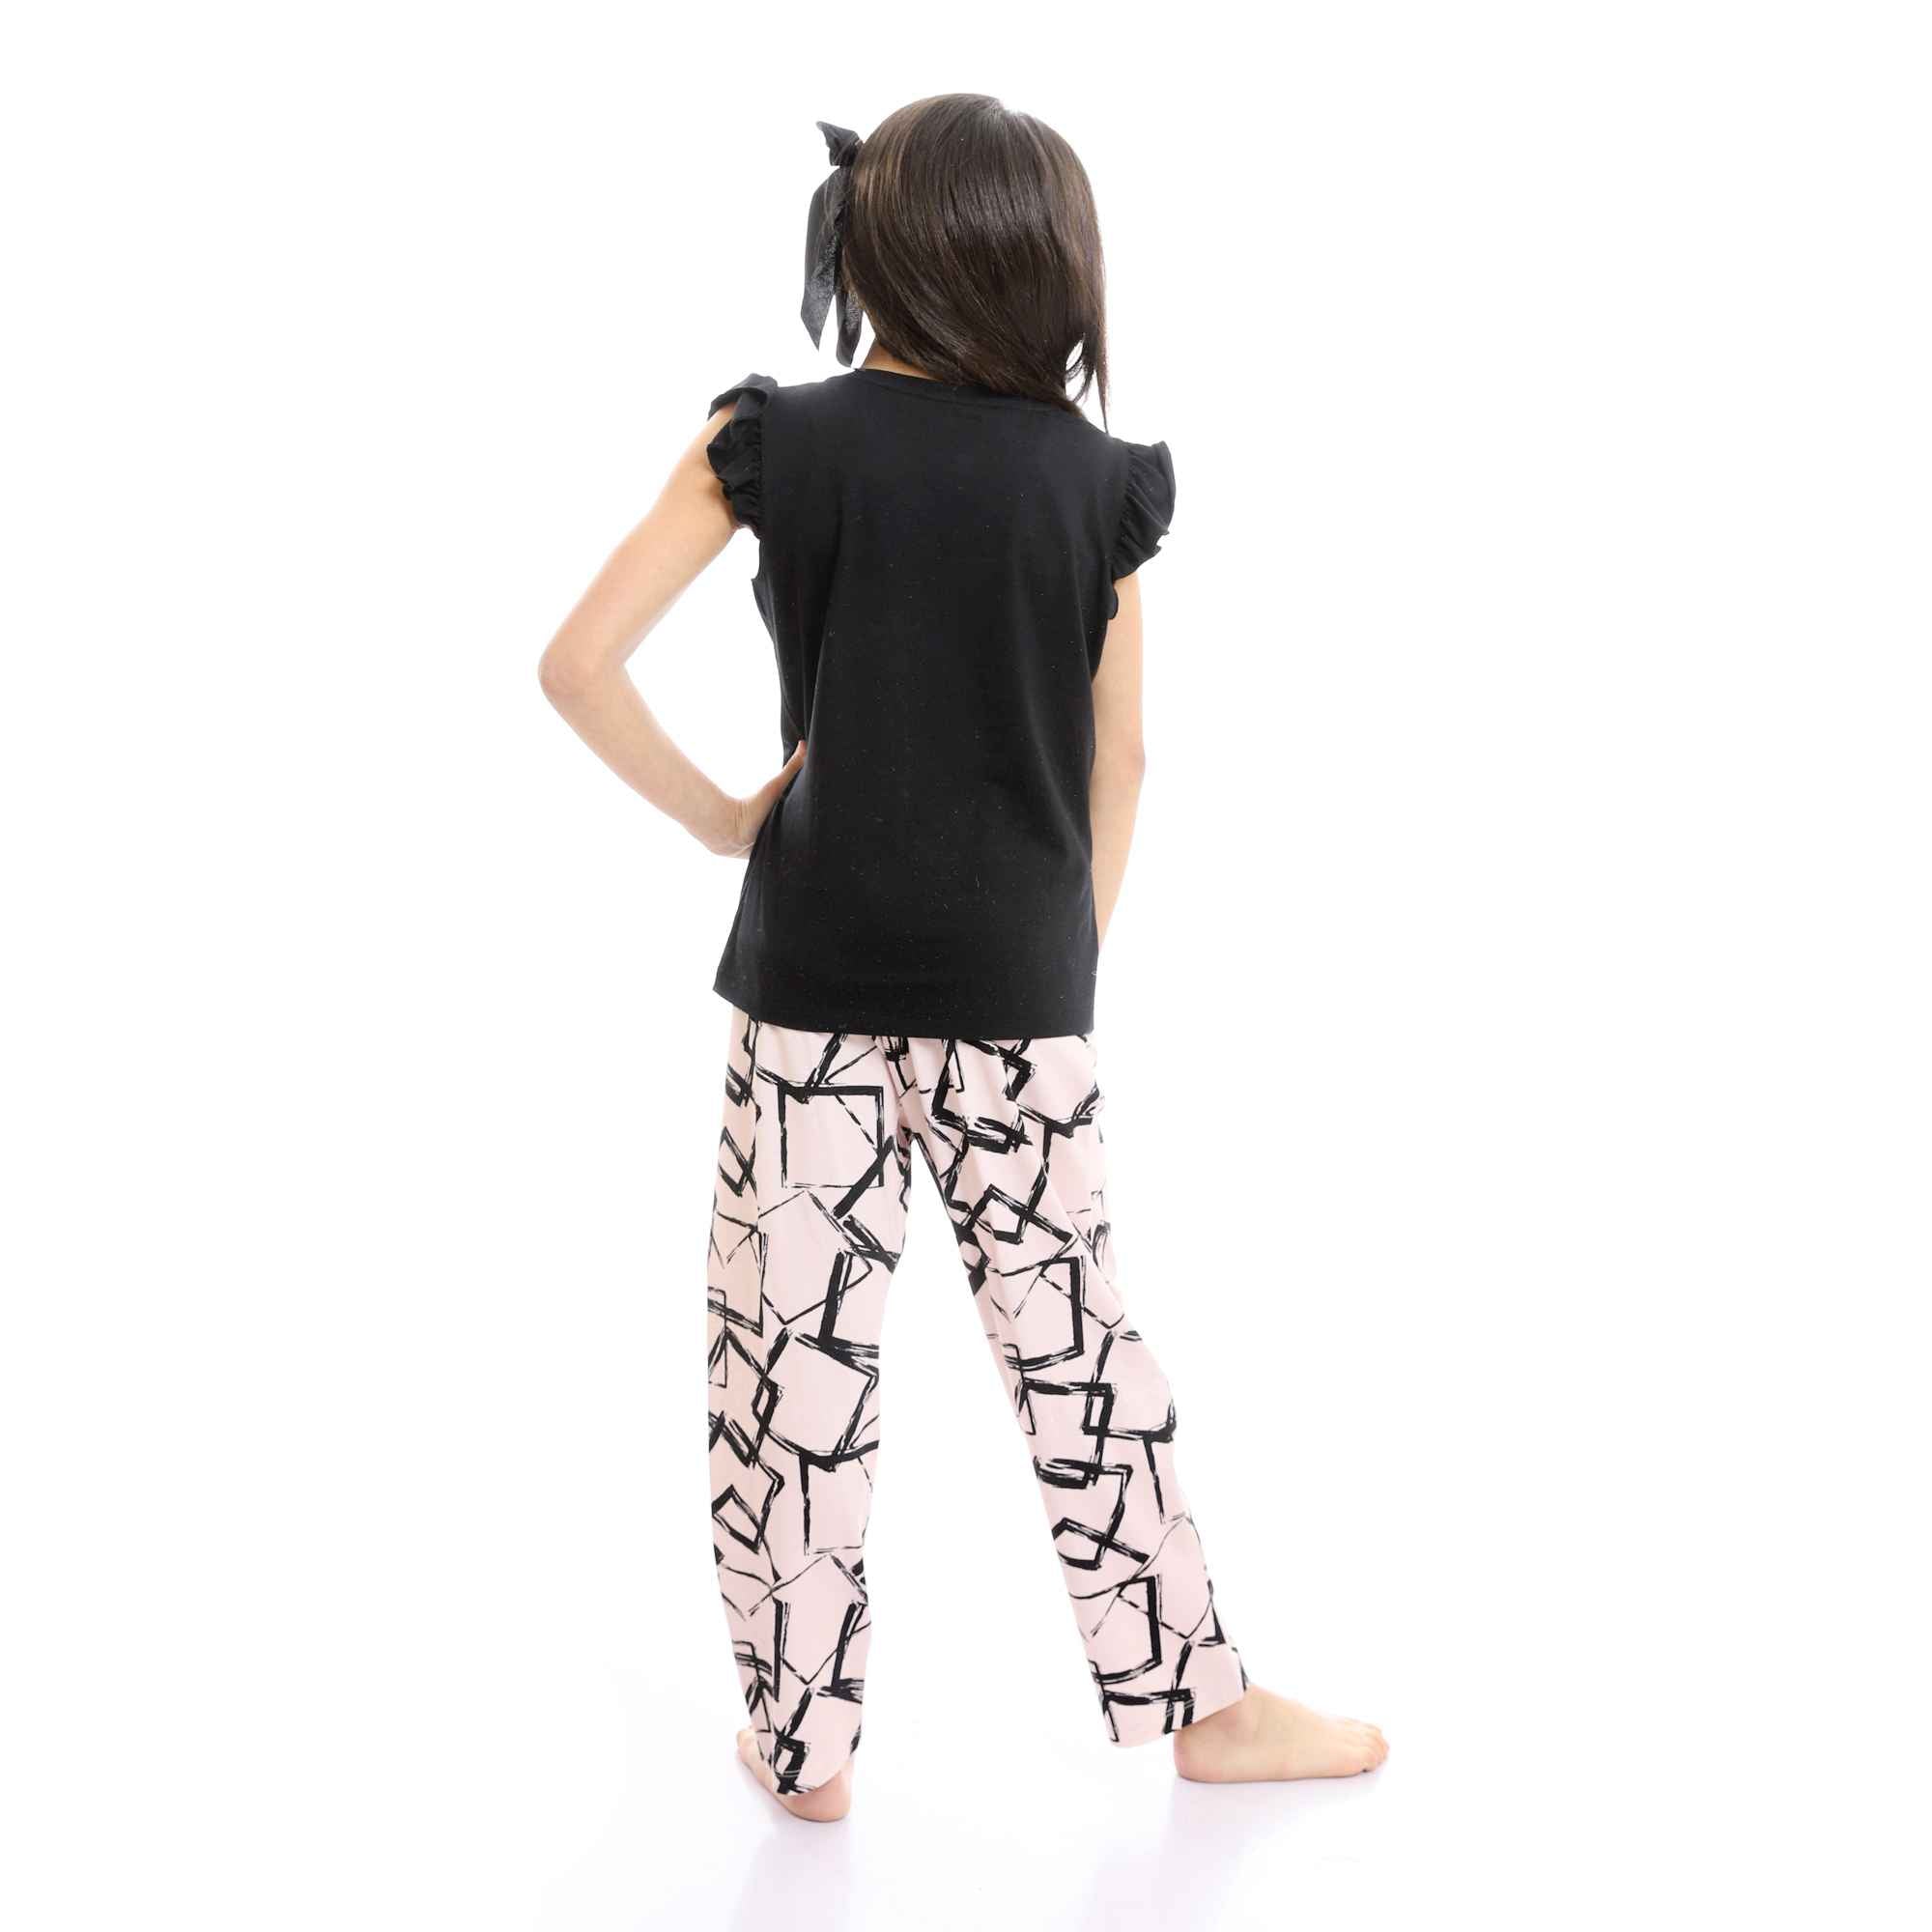 Girls Cap Sleeves Tee & Patterned Pants Pajama Set - Black & Rose